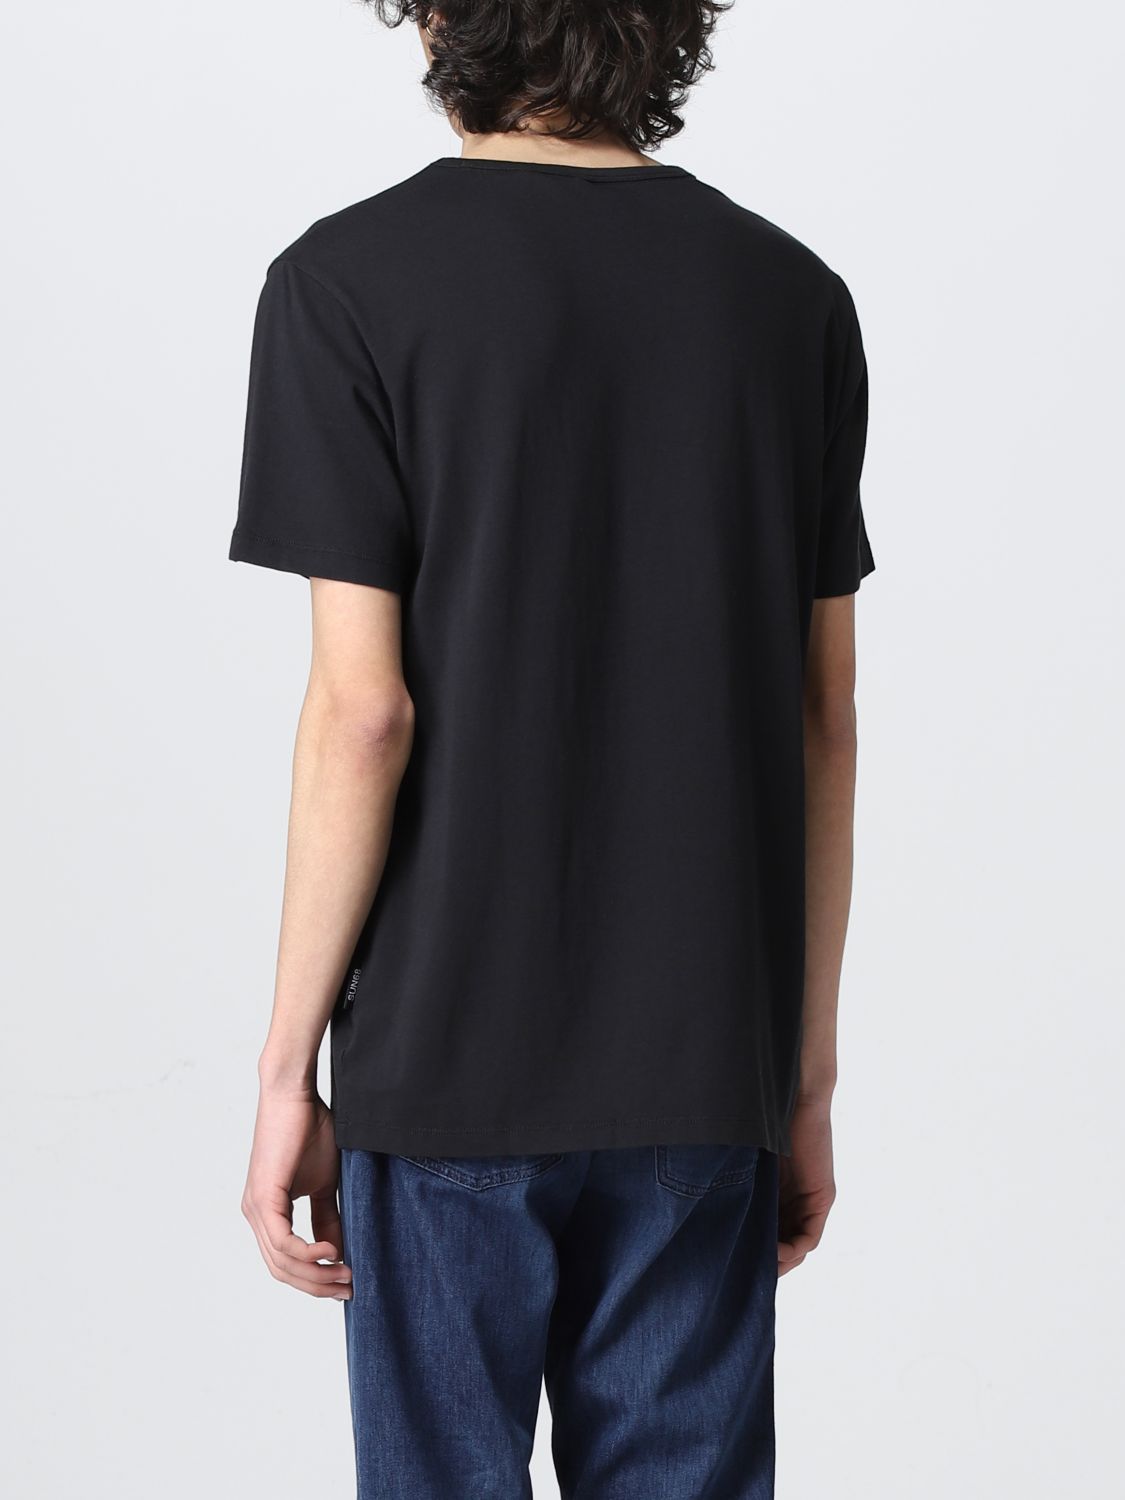 T-shirt Sun 68: Sun 68 t-shirt for men black 2